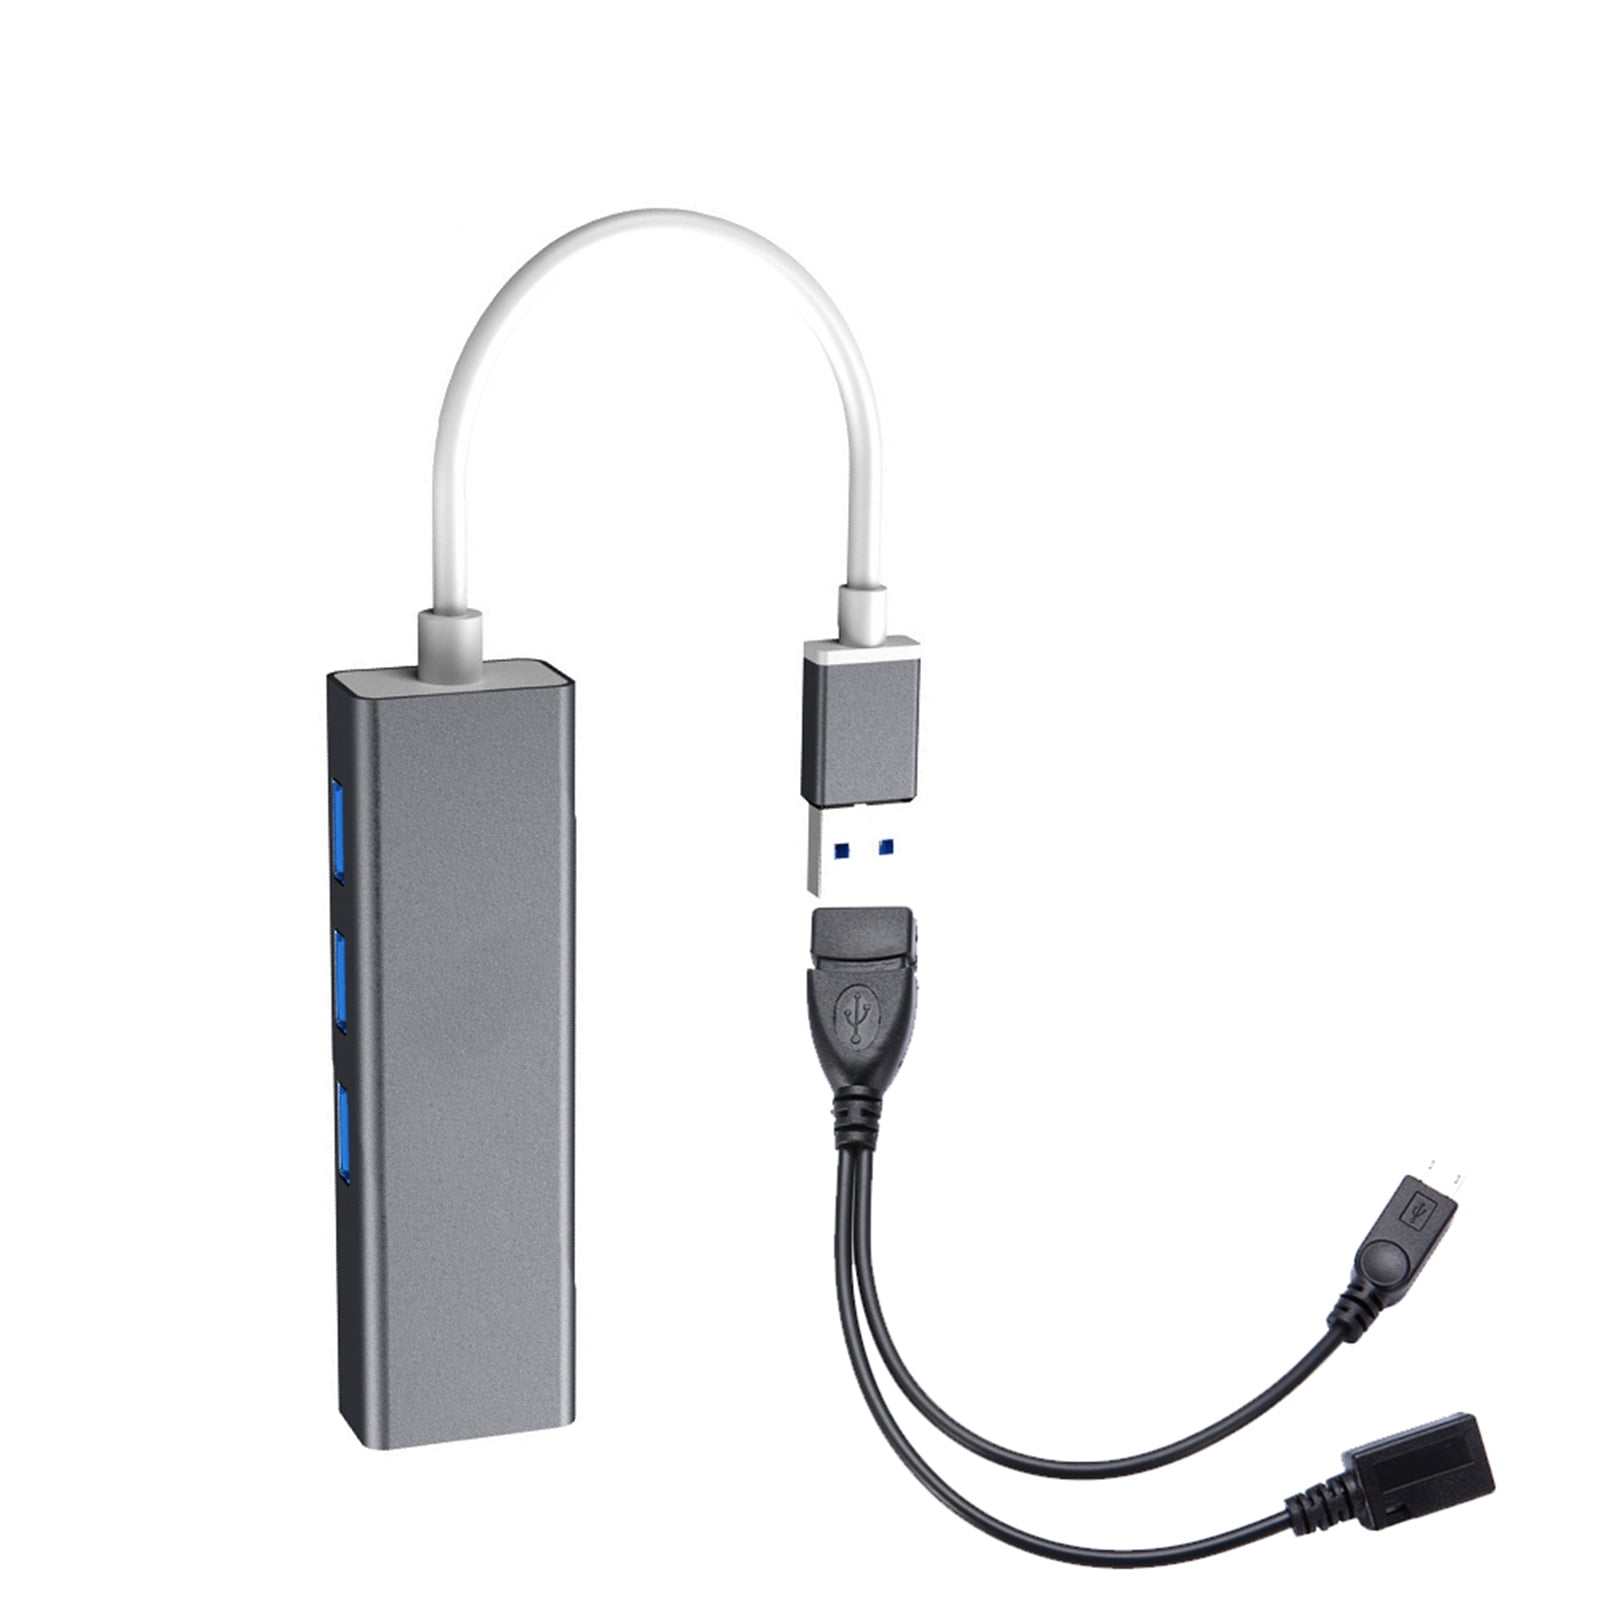 LAN with 3 Ports USB OTG Hub for Streaming TV Stick, Chromecast, Google Home Mini, Raspberry Pi Zero - Powered Micro USB OTG Cable Included - Walmart.com